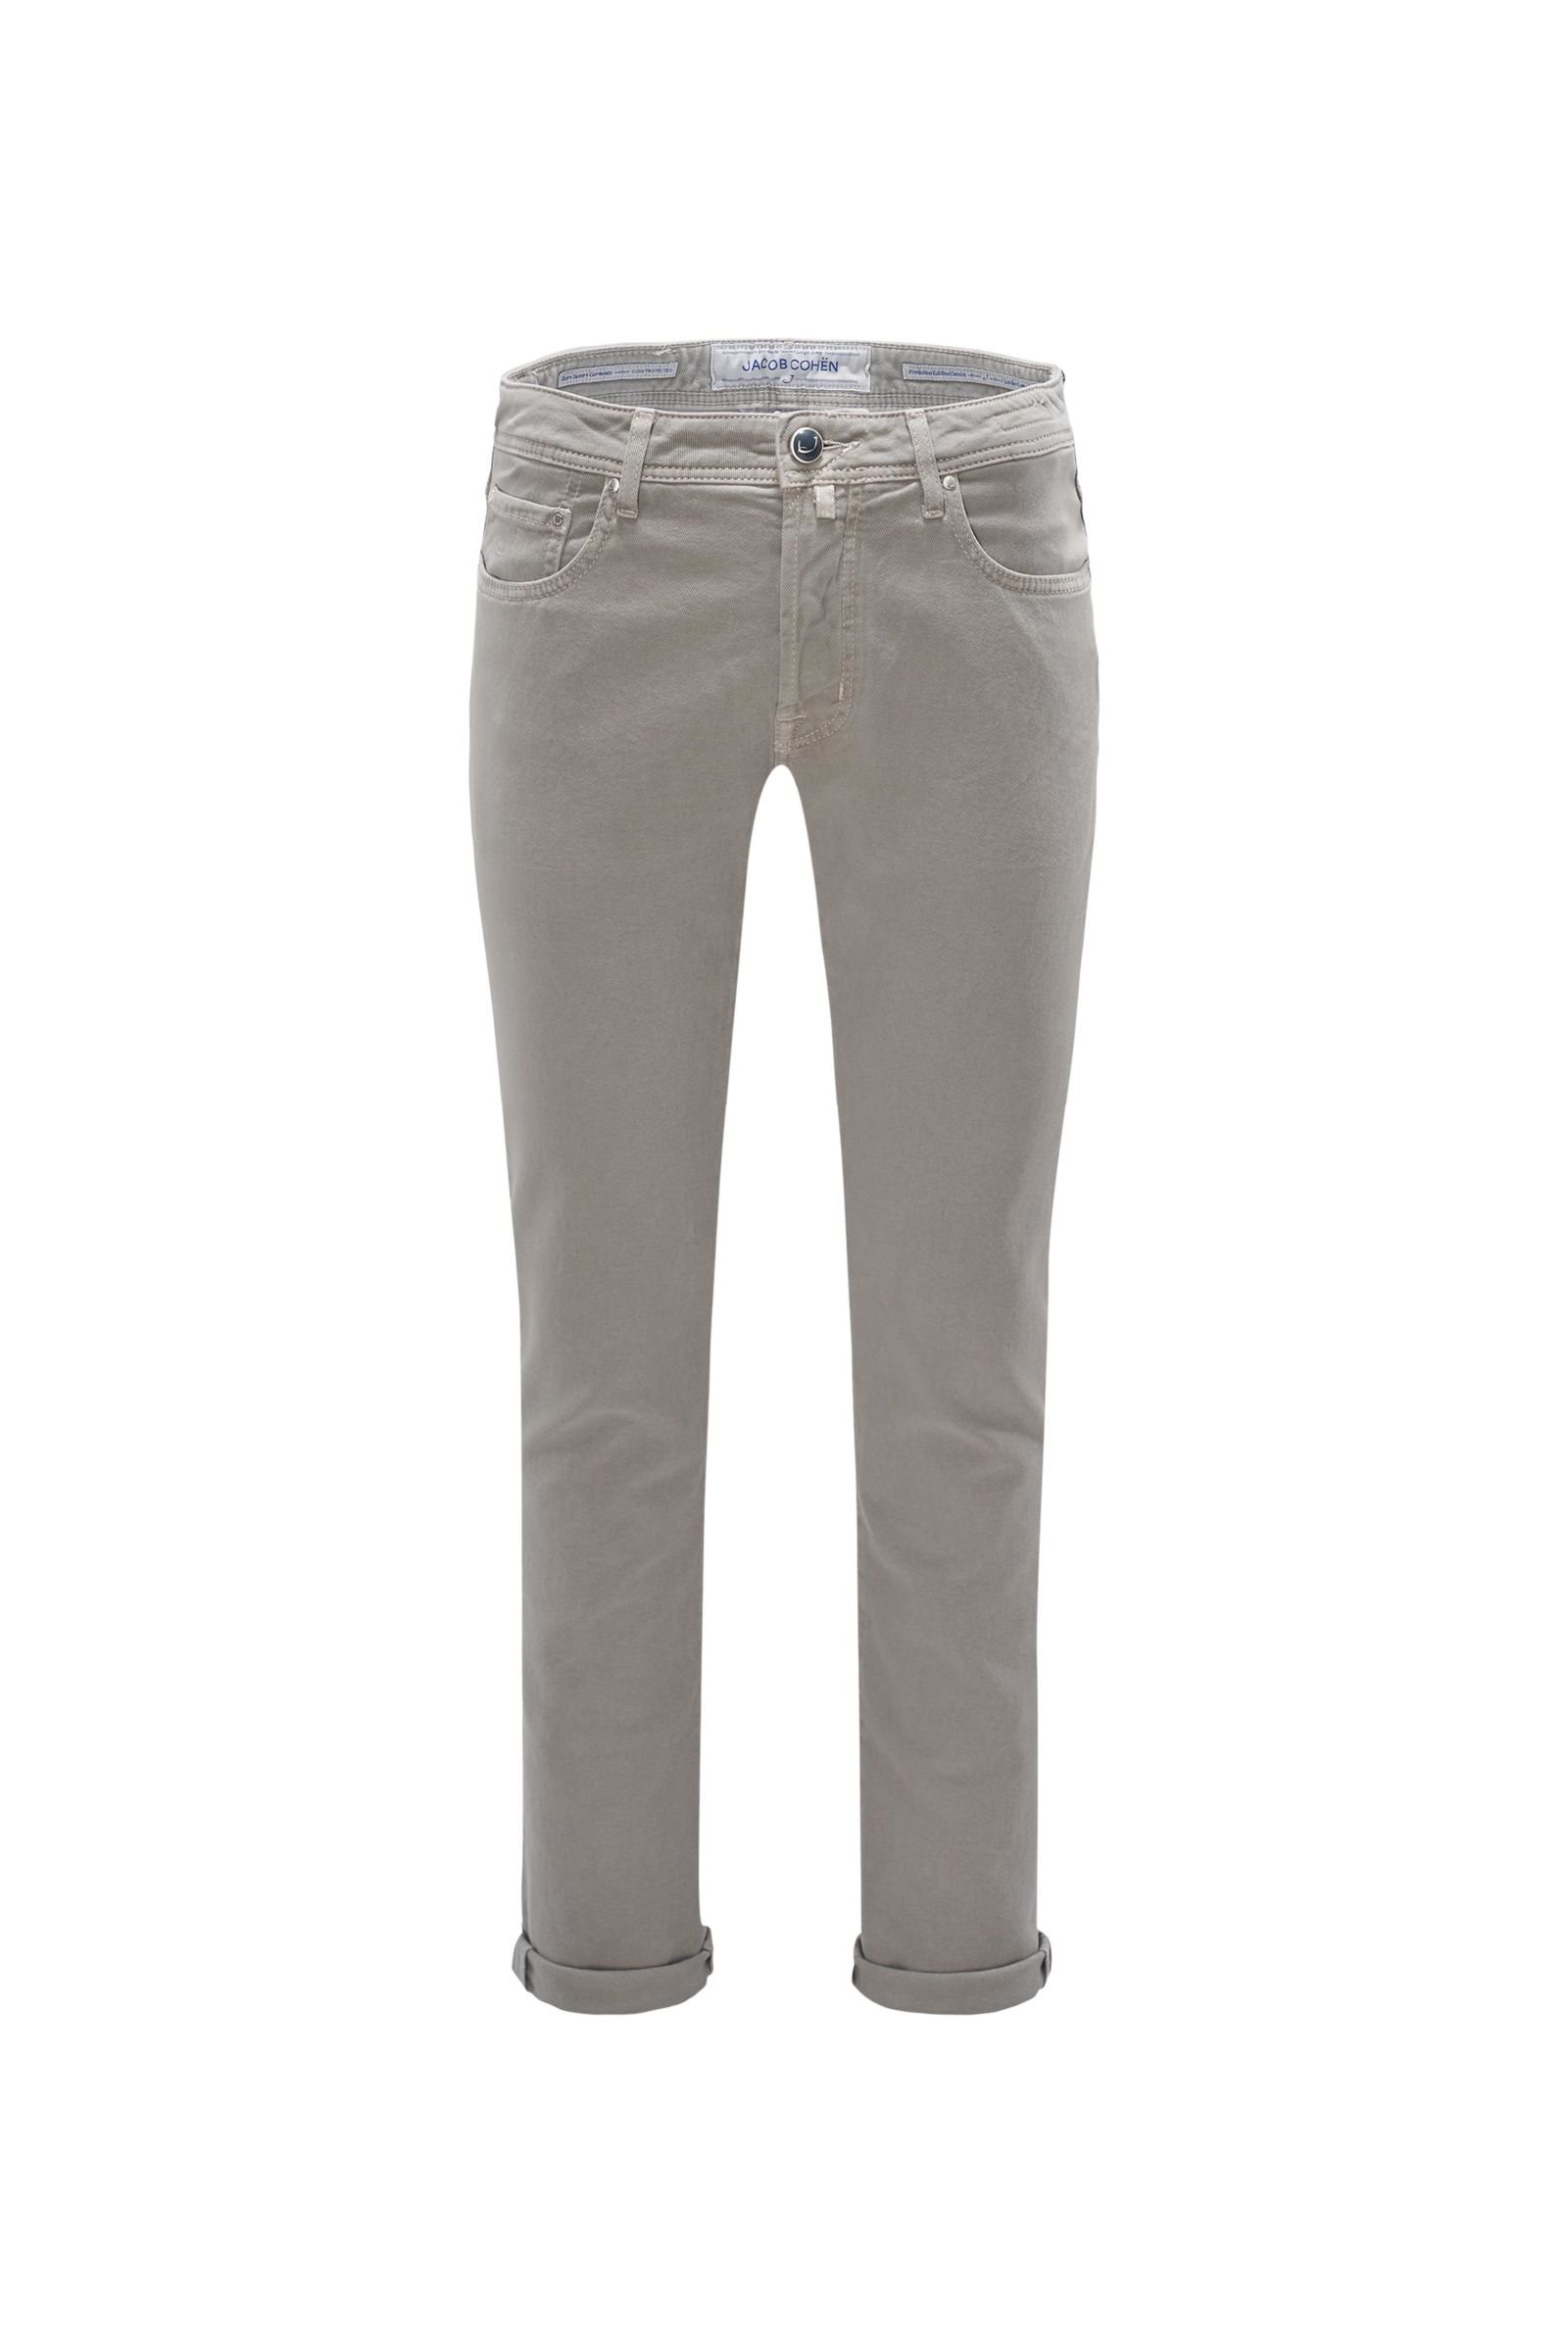 Cotton trousers 'J688 Comfort Slim Fit' light grey